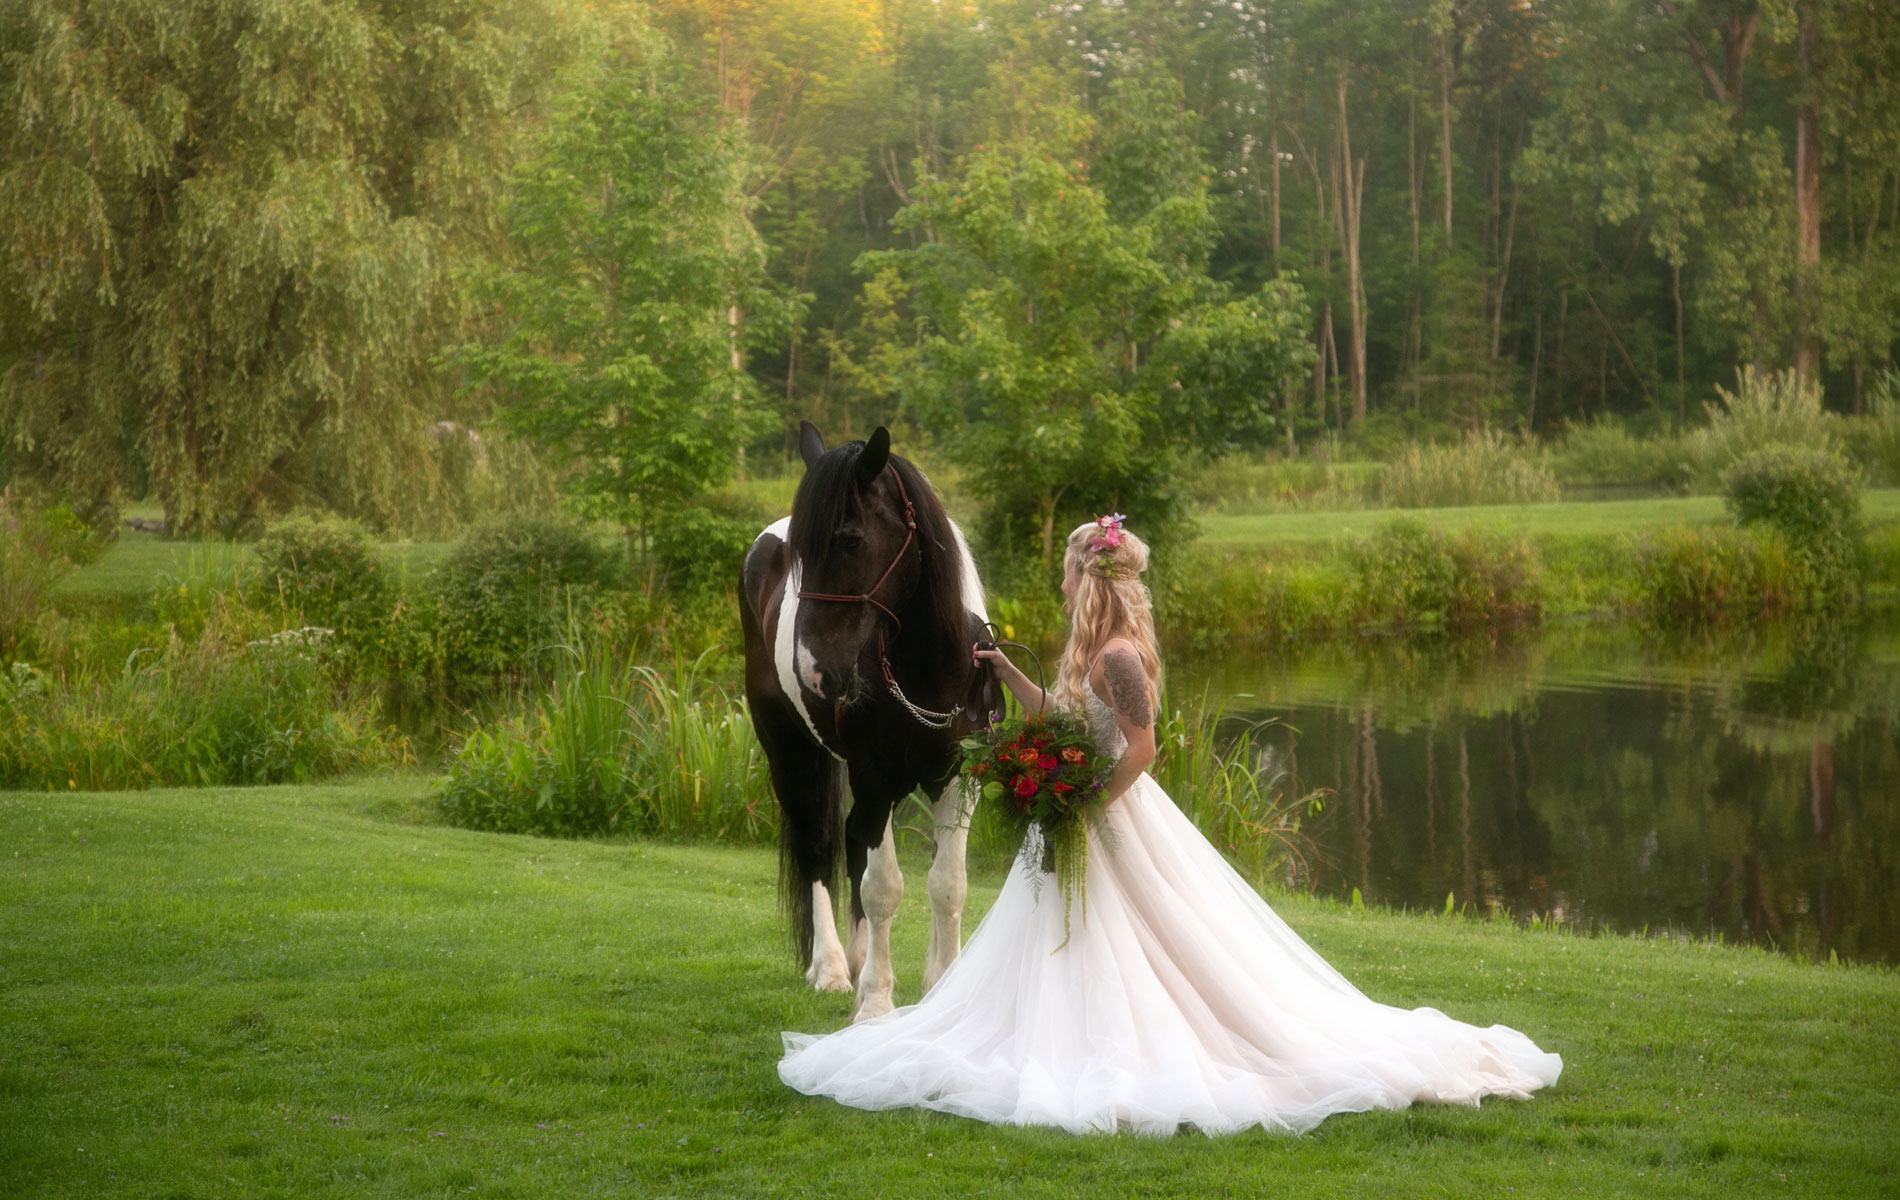 fairy tale style wedding photo